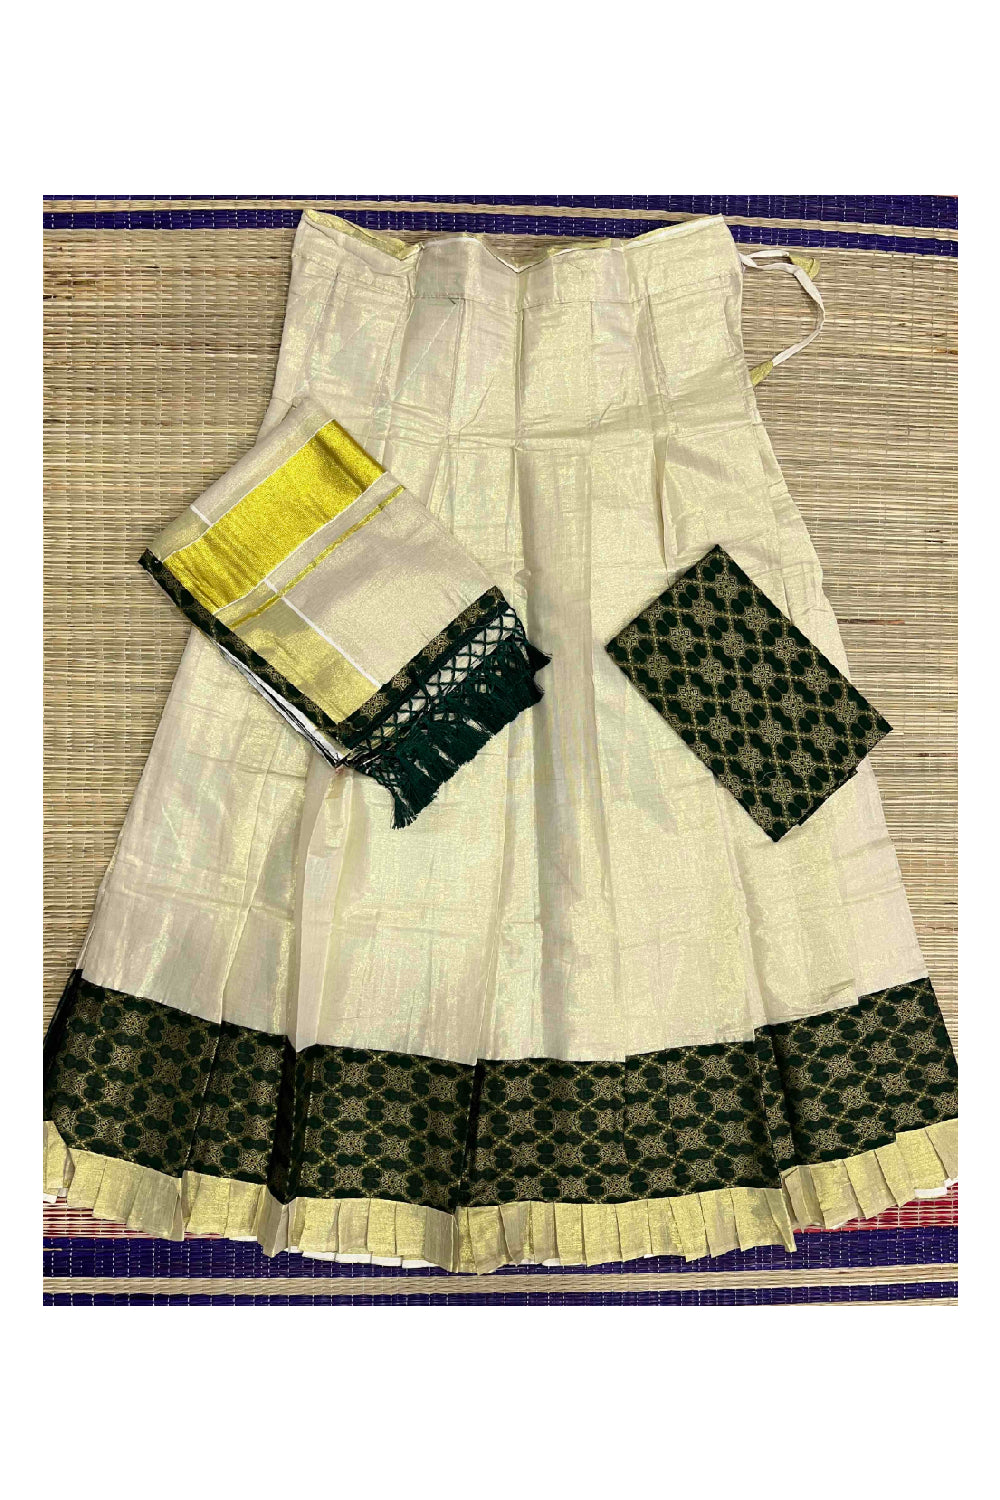 Kerala Tissue Stitched Dhavani Set with Blouse Piece and Neriyathu ...